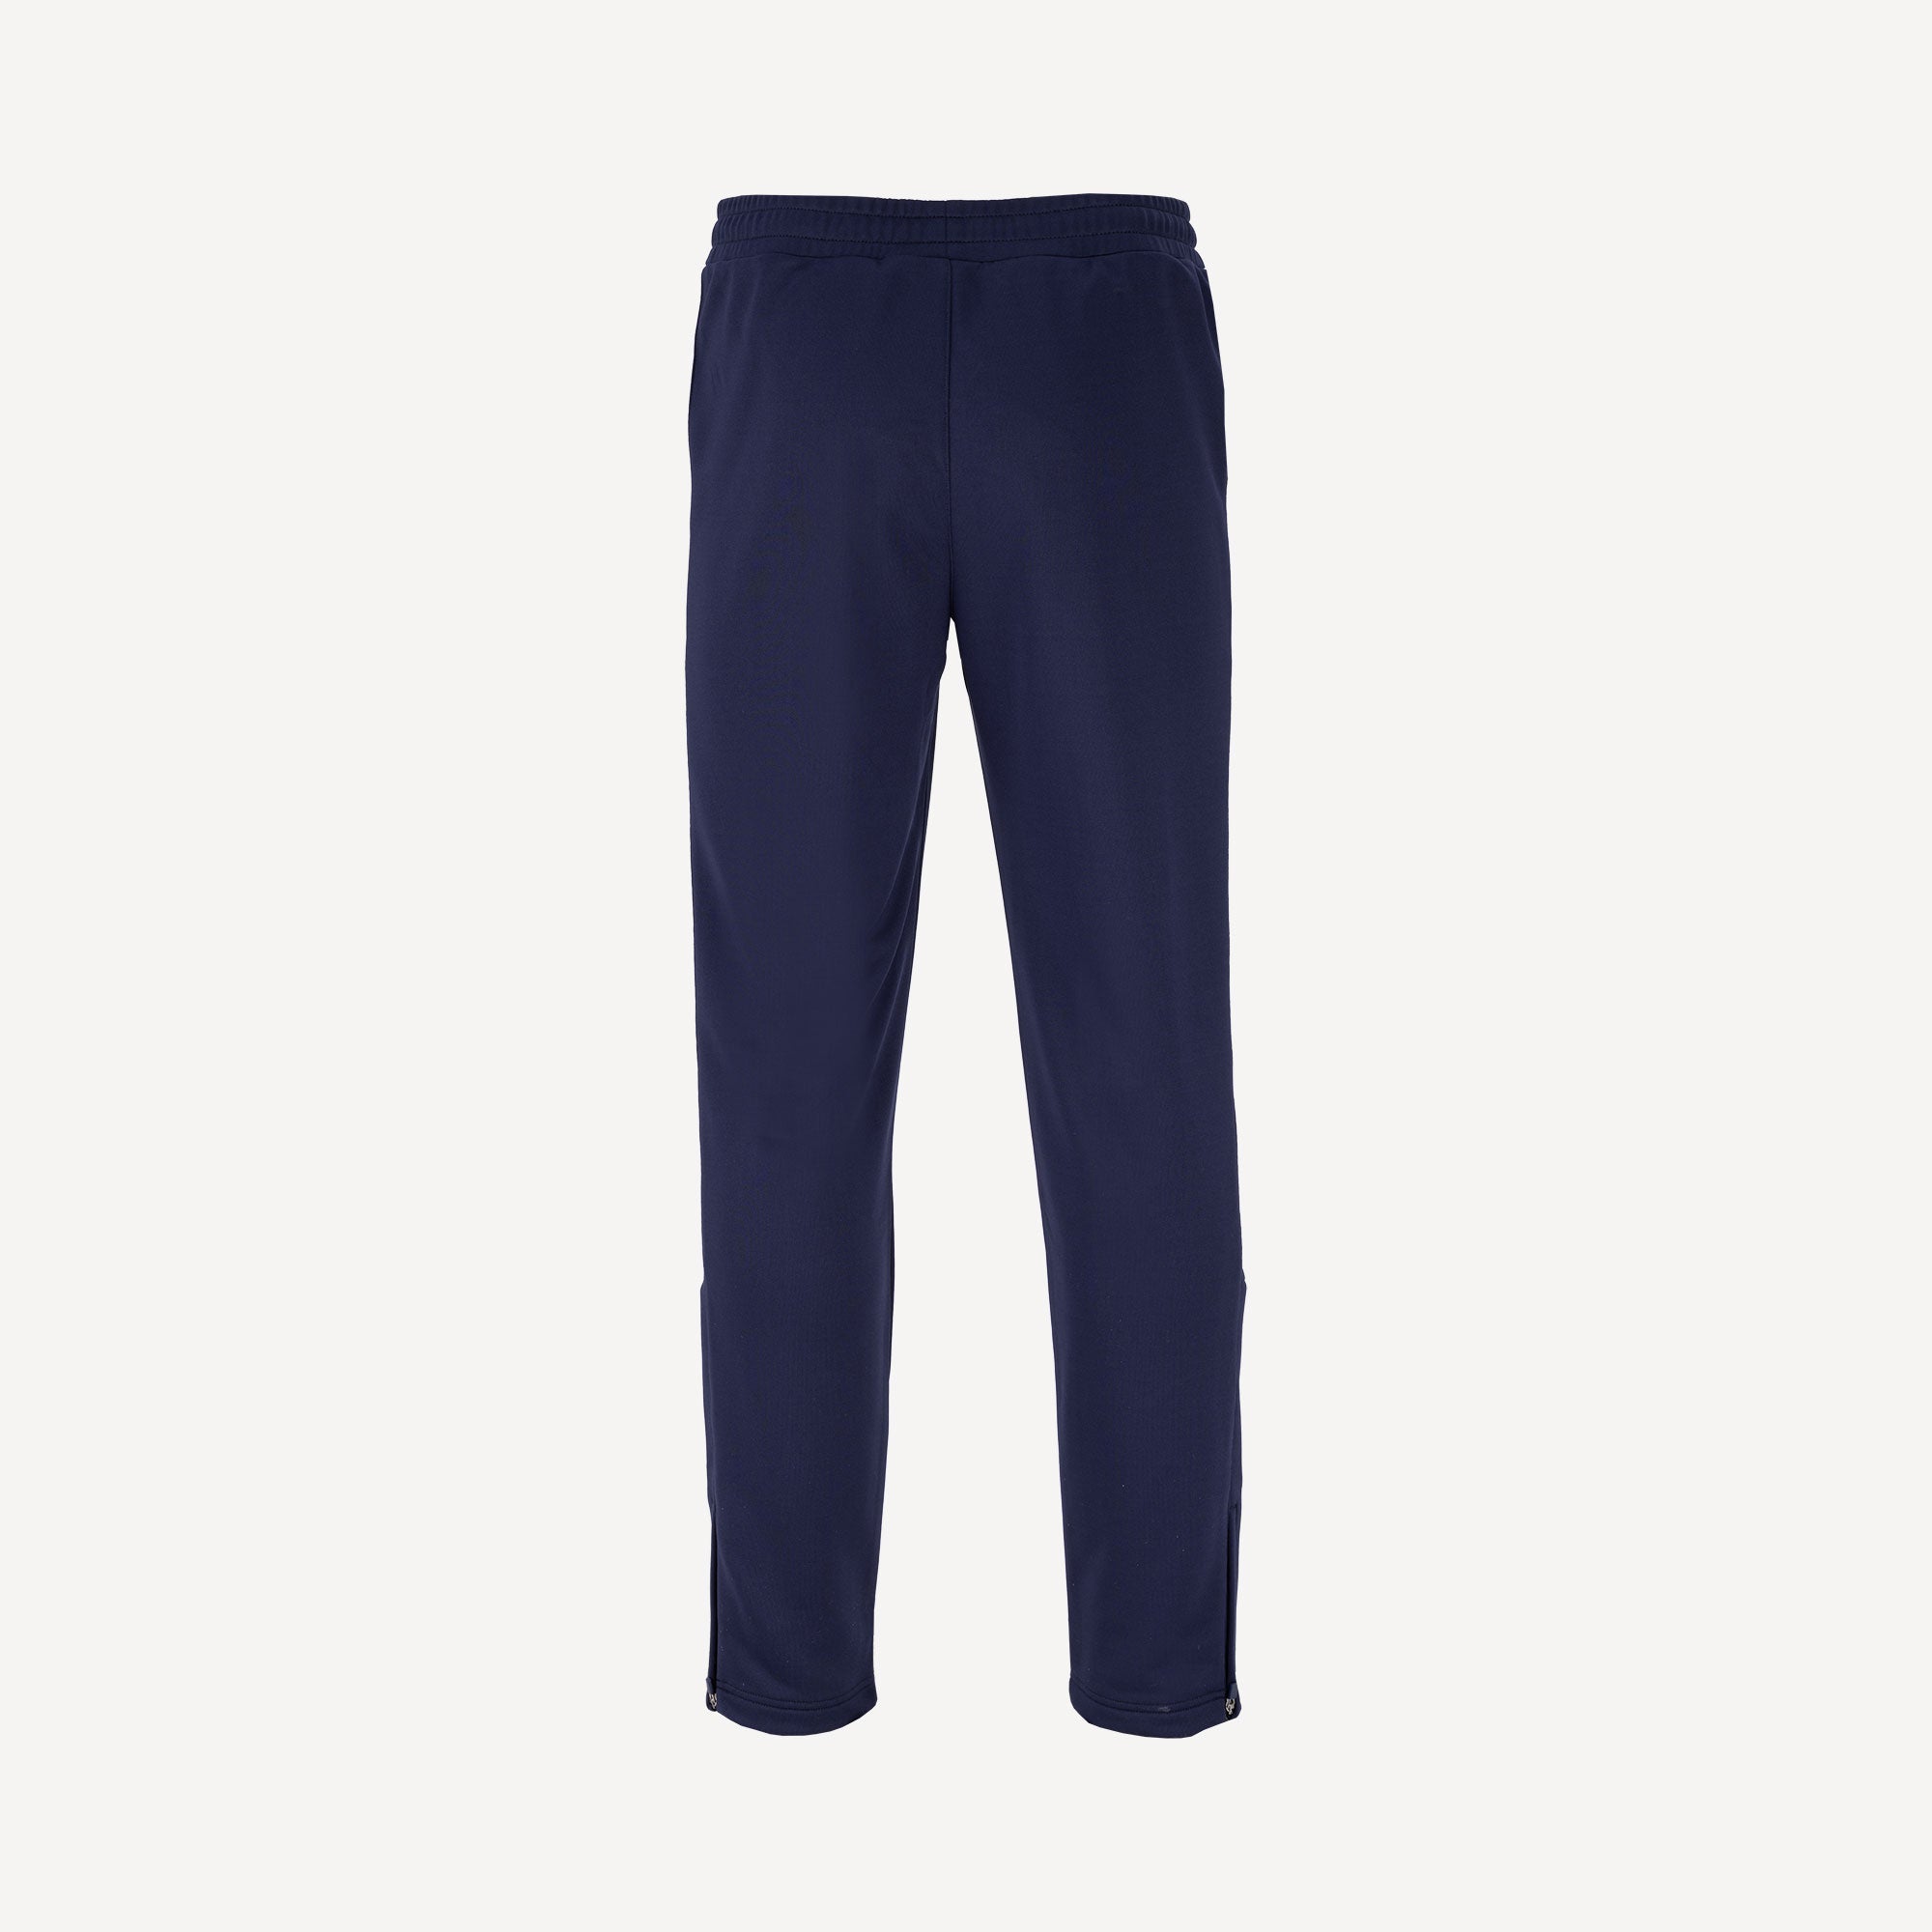 Fila Jan Men's Tennis Pants - Dark Blue (2)